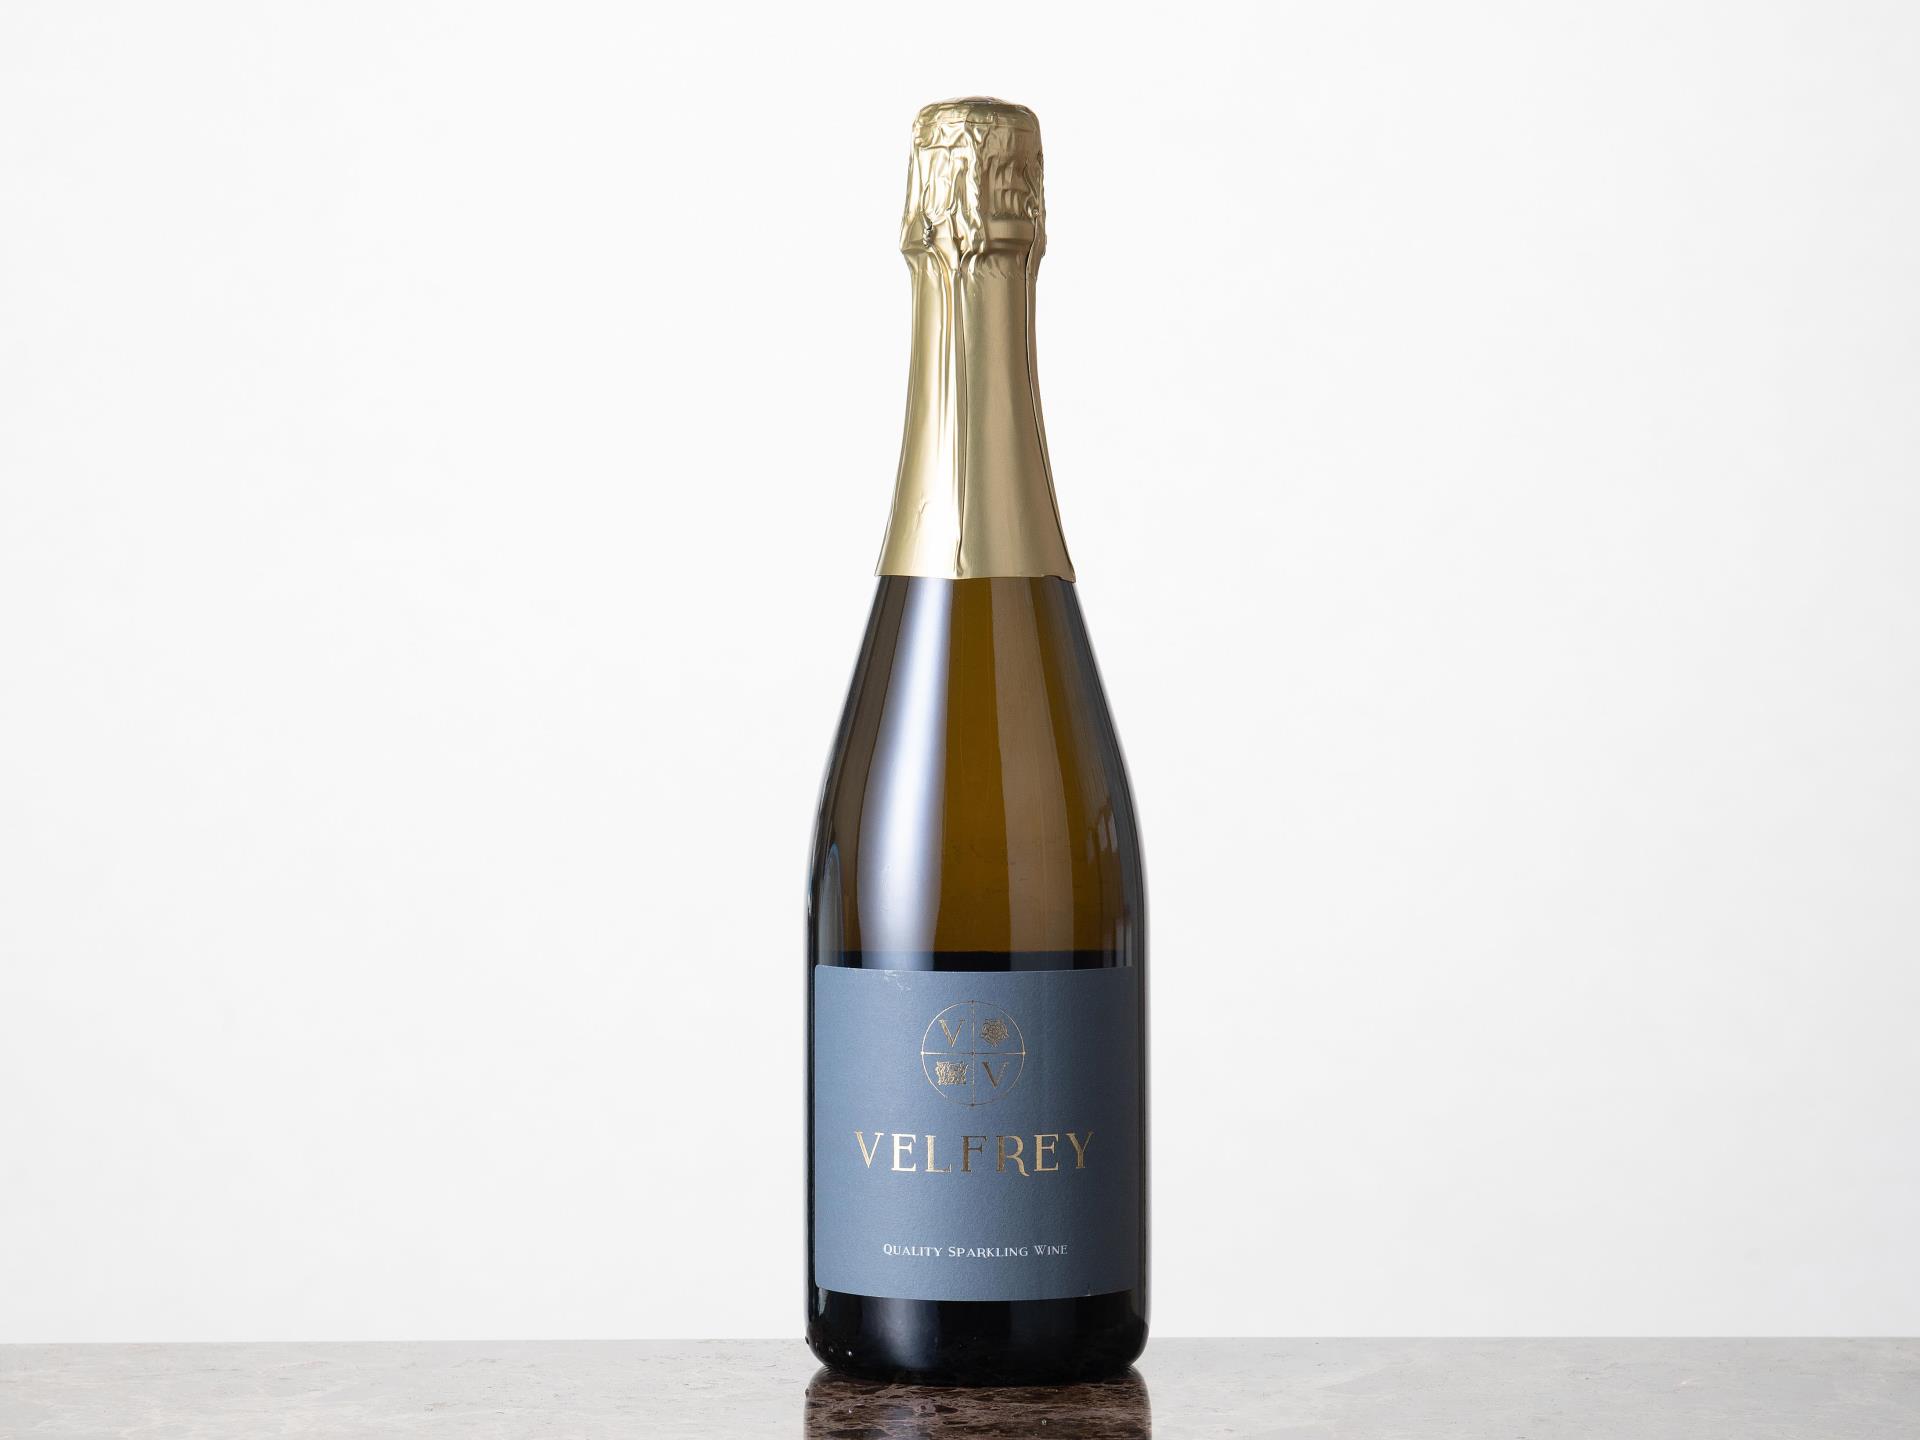 Award-winning Velfrey non-vintage sparkling wine